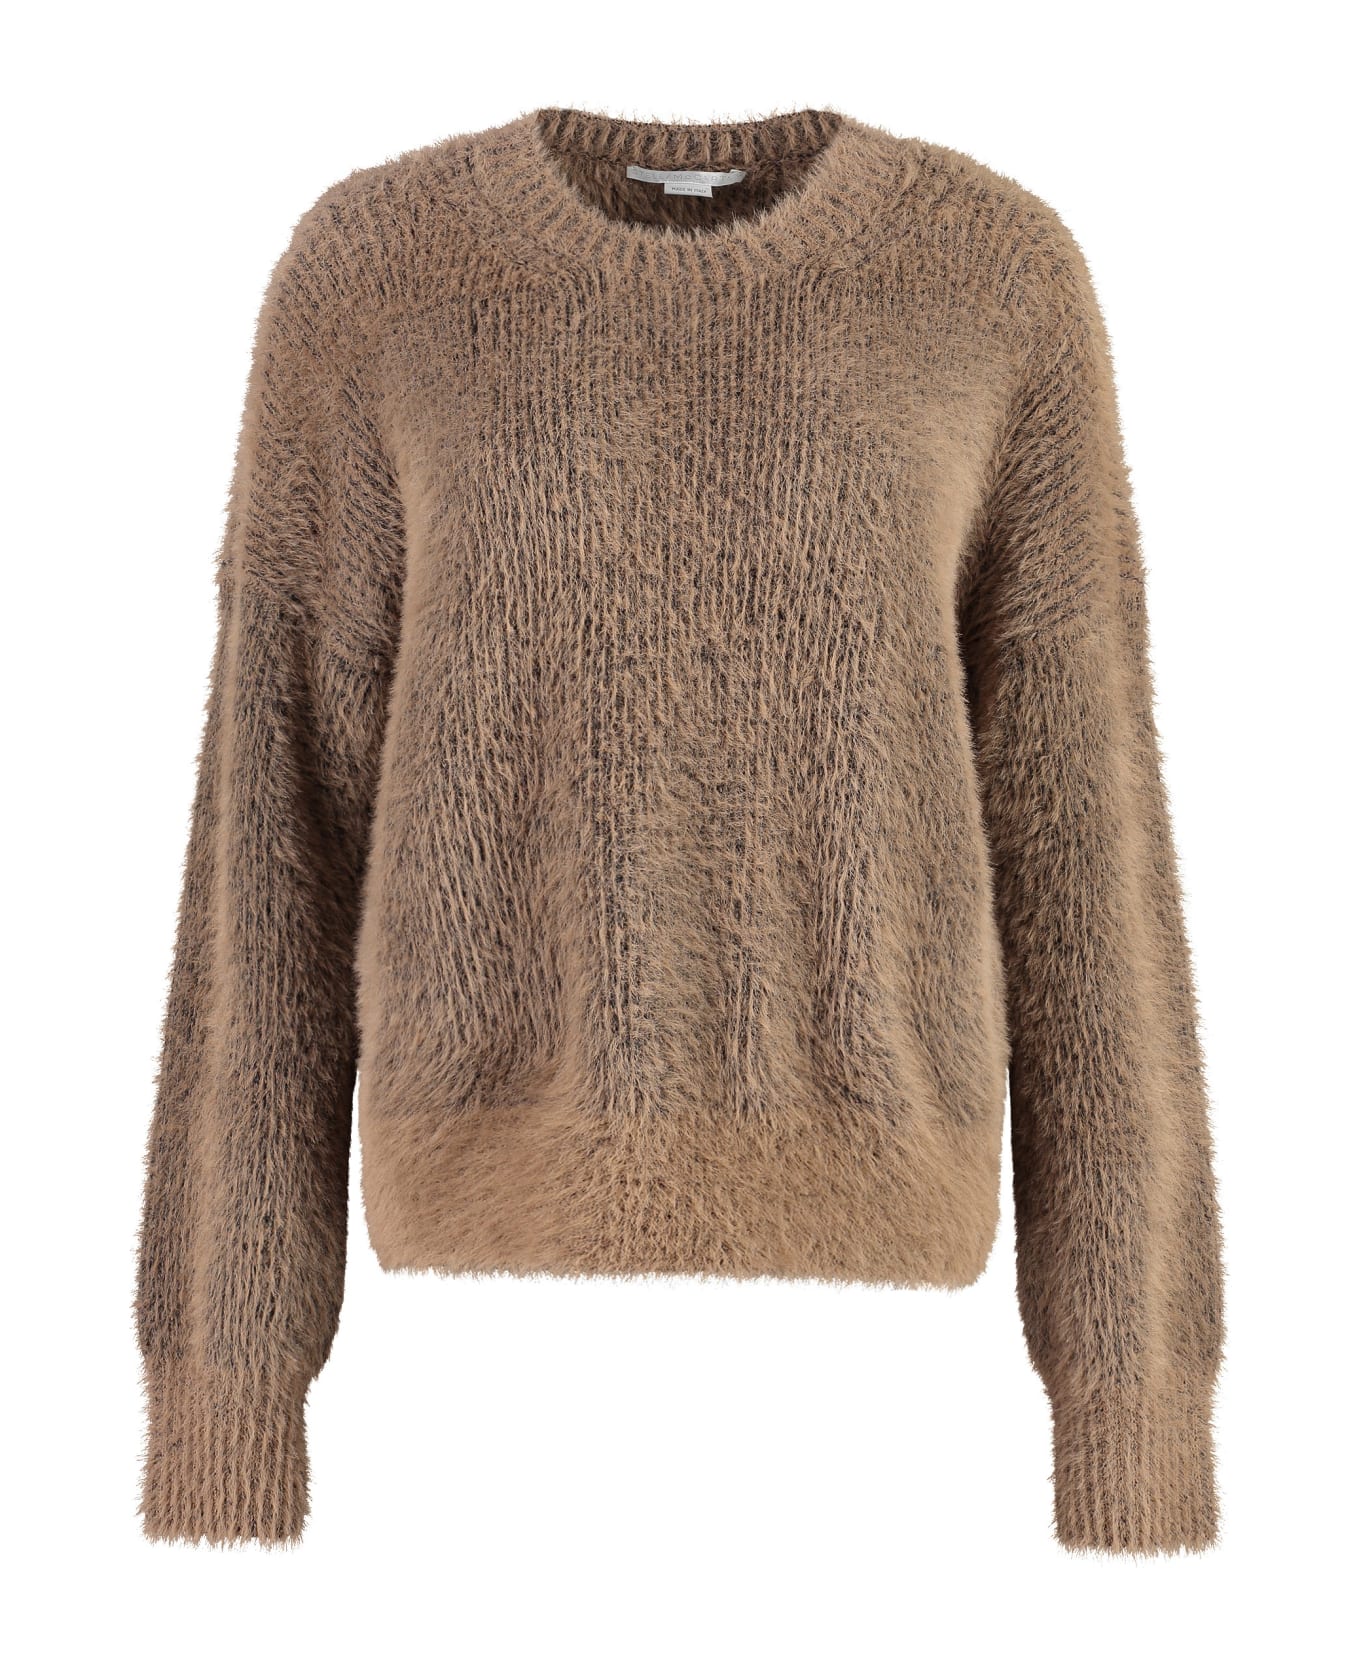 Stella McCartney Fluffy Long Sleeve Crew-neck Sweater - Camel ニットウェア